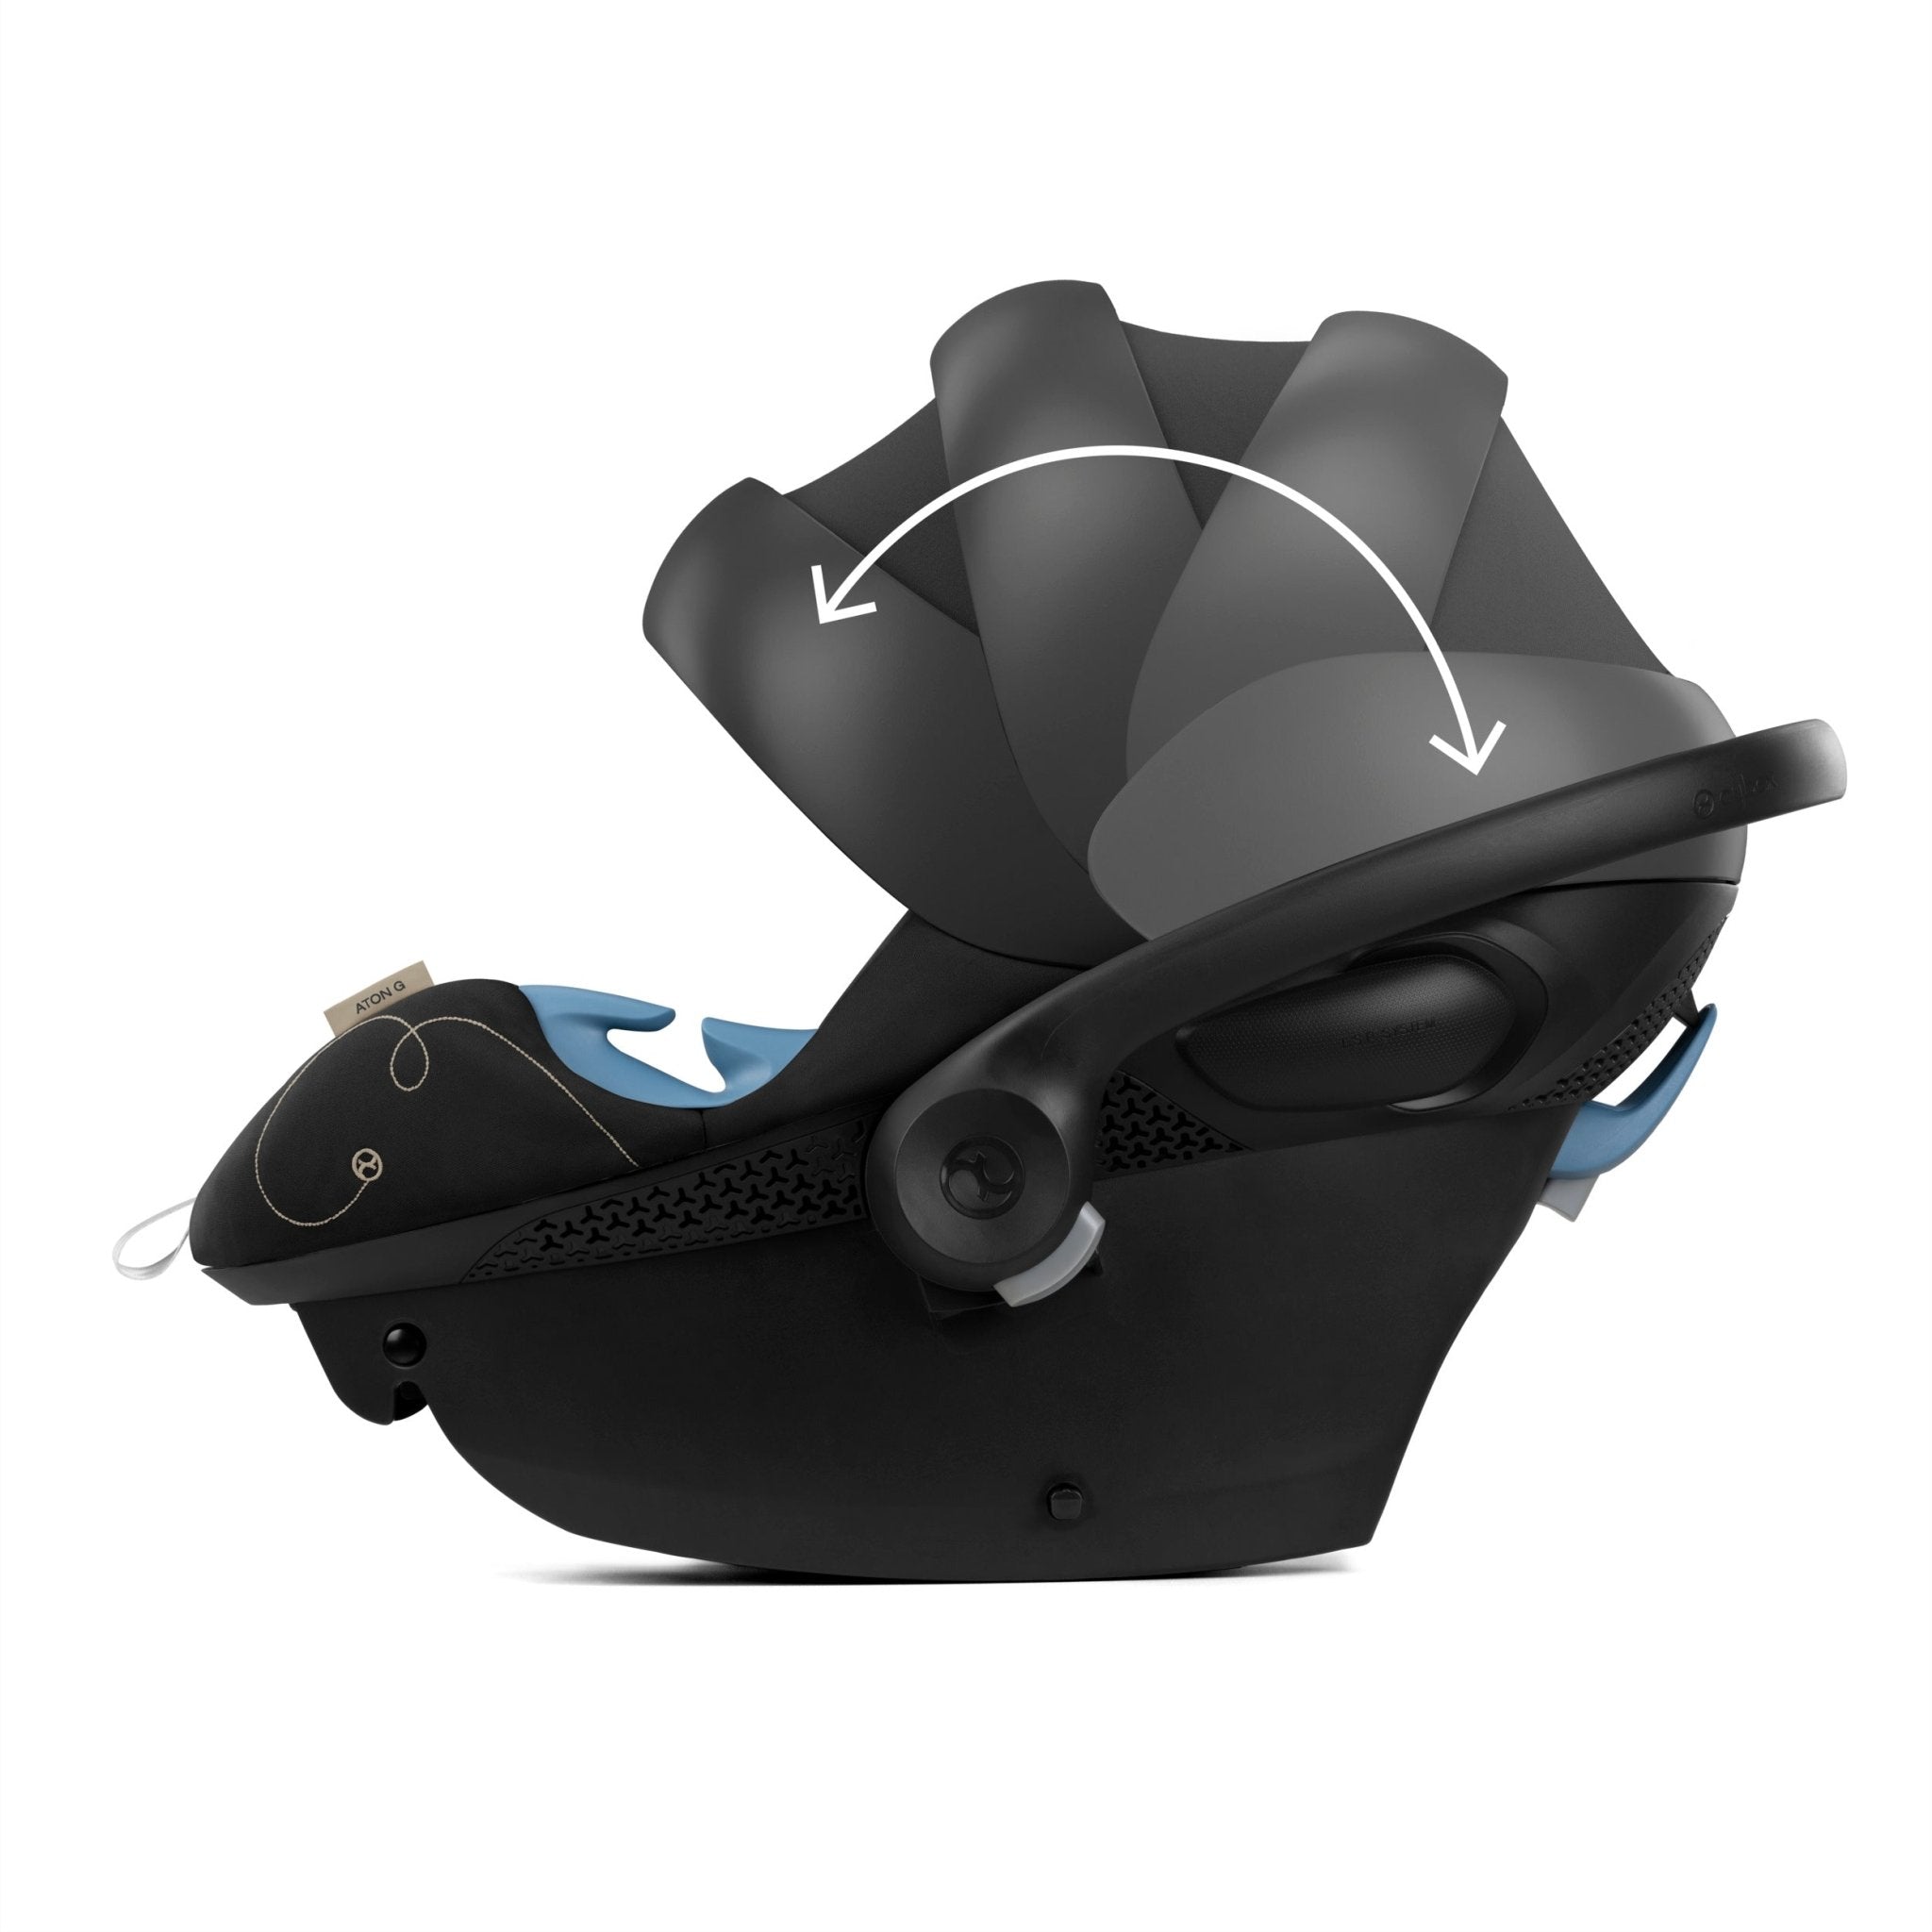 Cybex Aton G Sensorsafe Infant Car Seat, -- ANB Baby